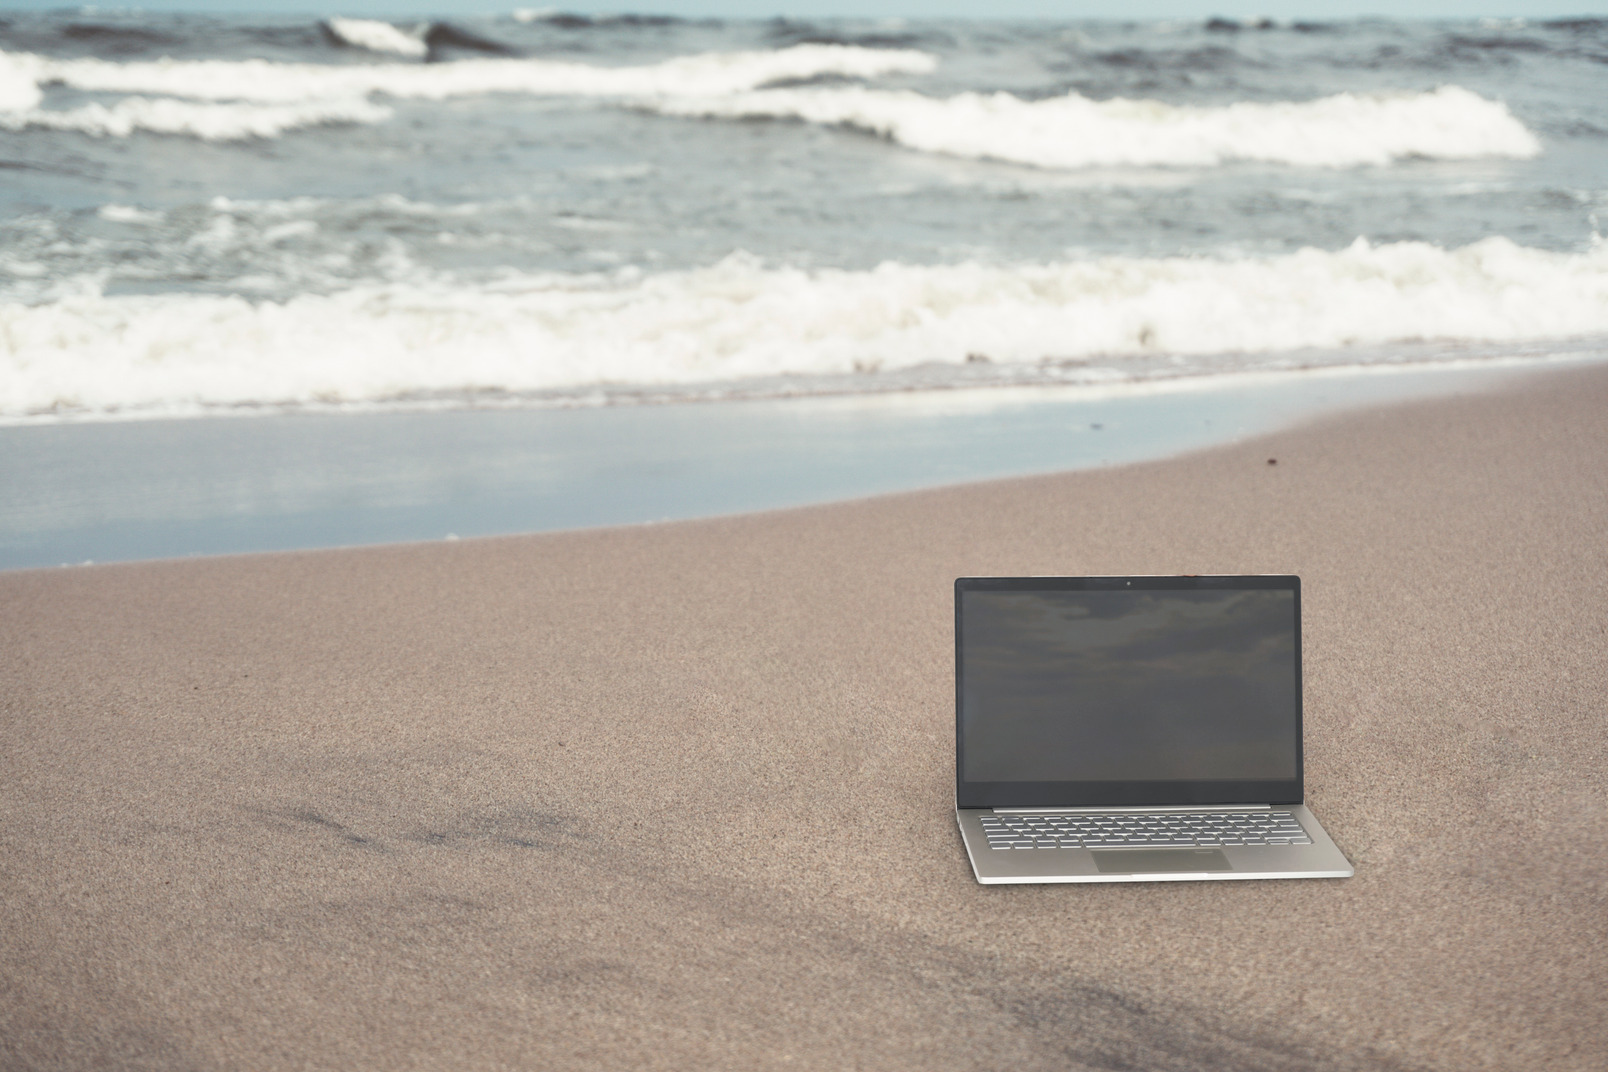 Macbook pro at the sandy beach